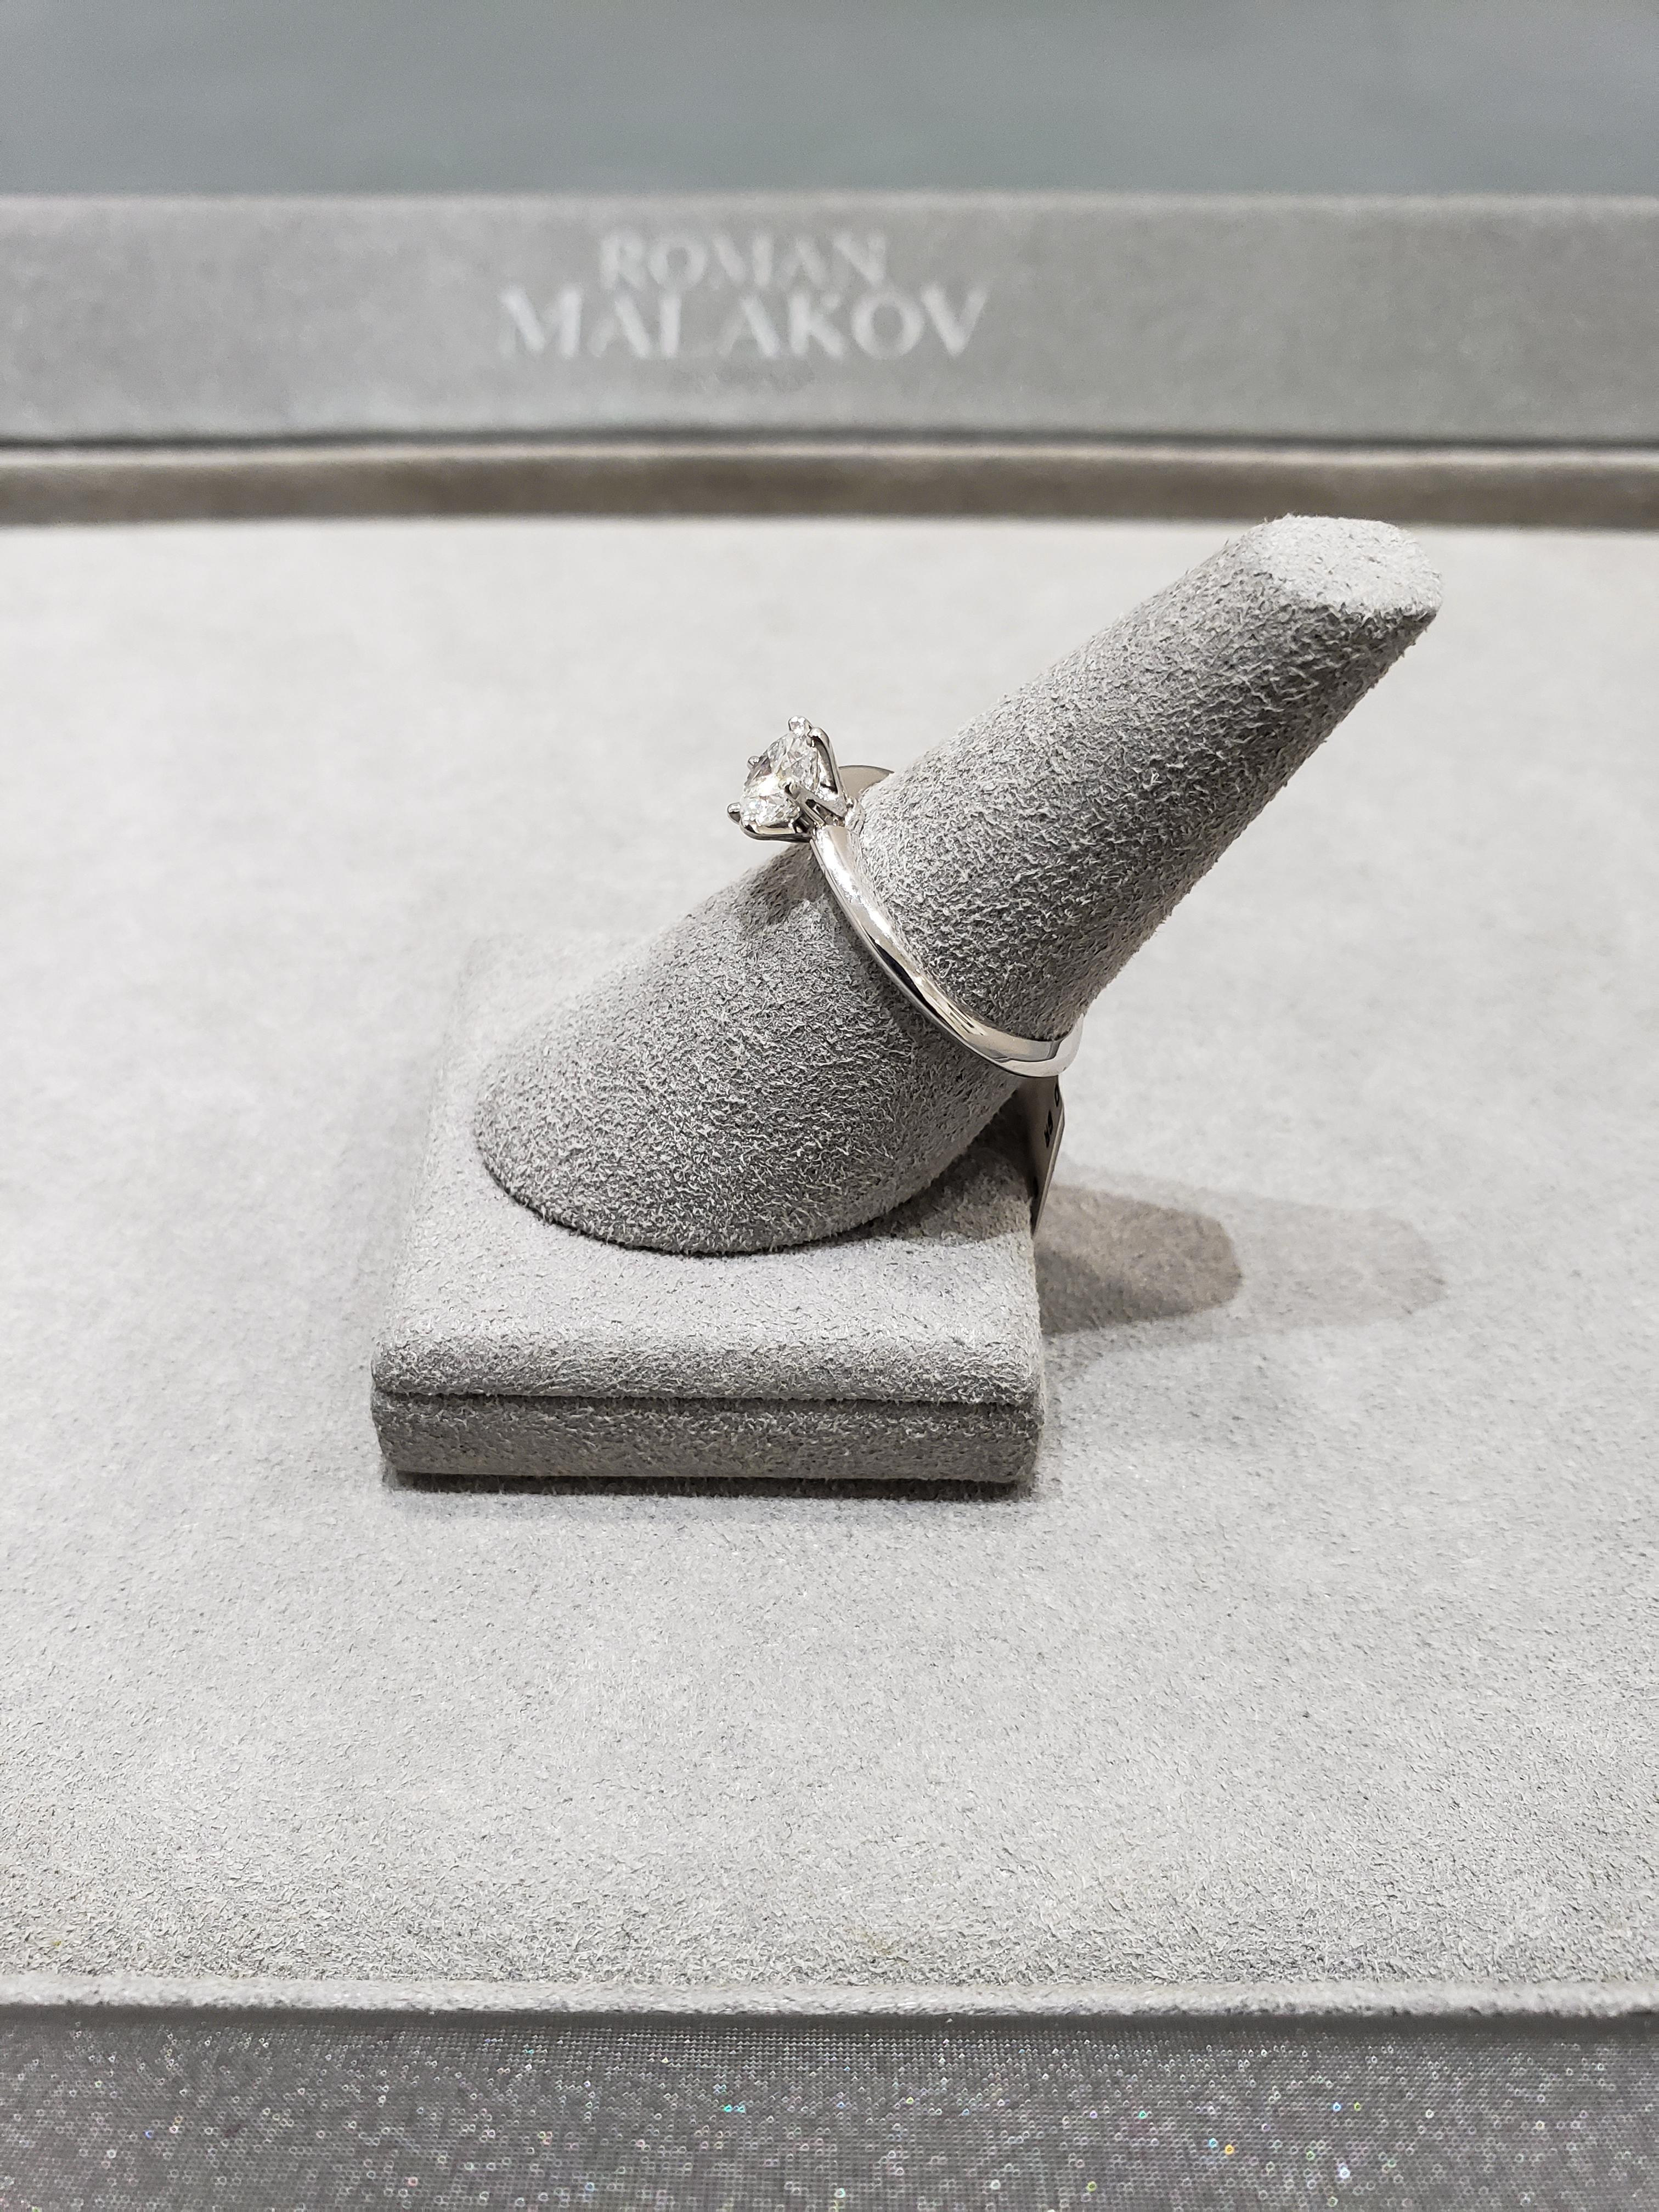 Contemporary Roman Malakov, GIA Certified Round Diamond Knife-Edge Solitaire Engagement Ring